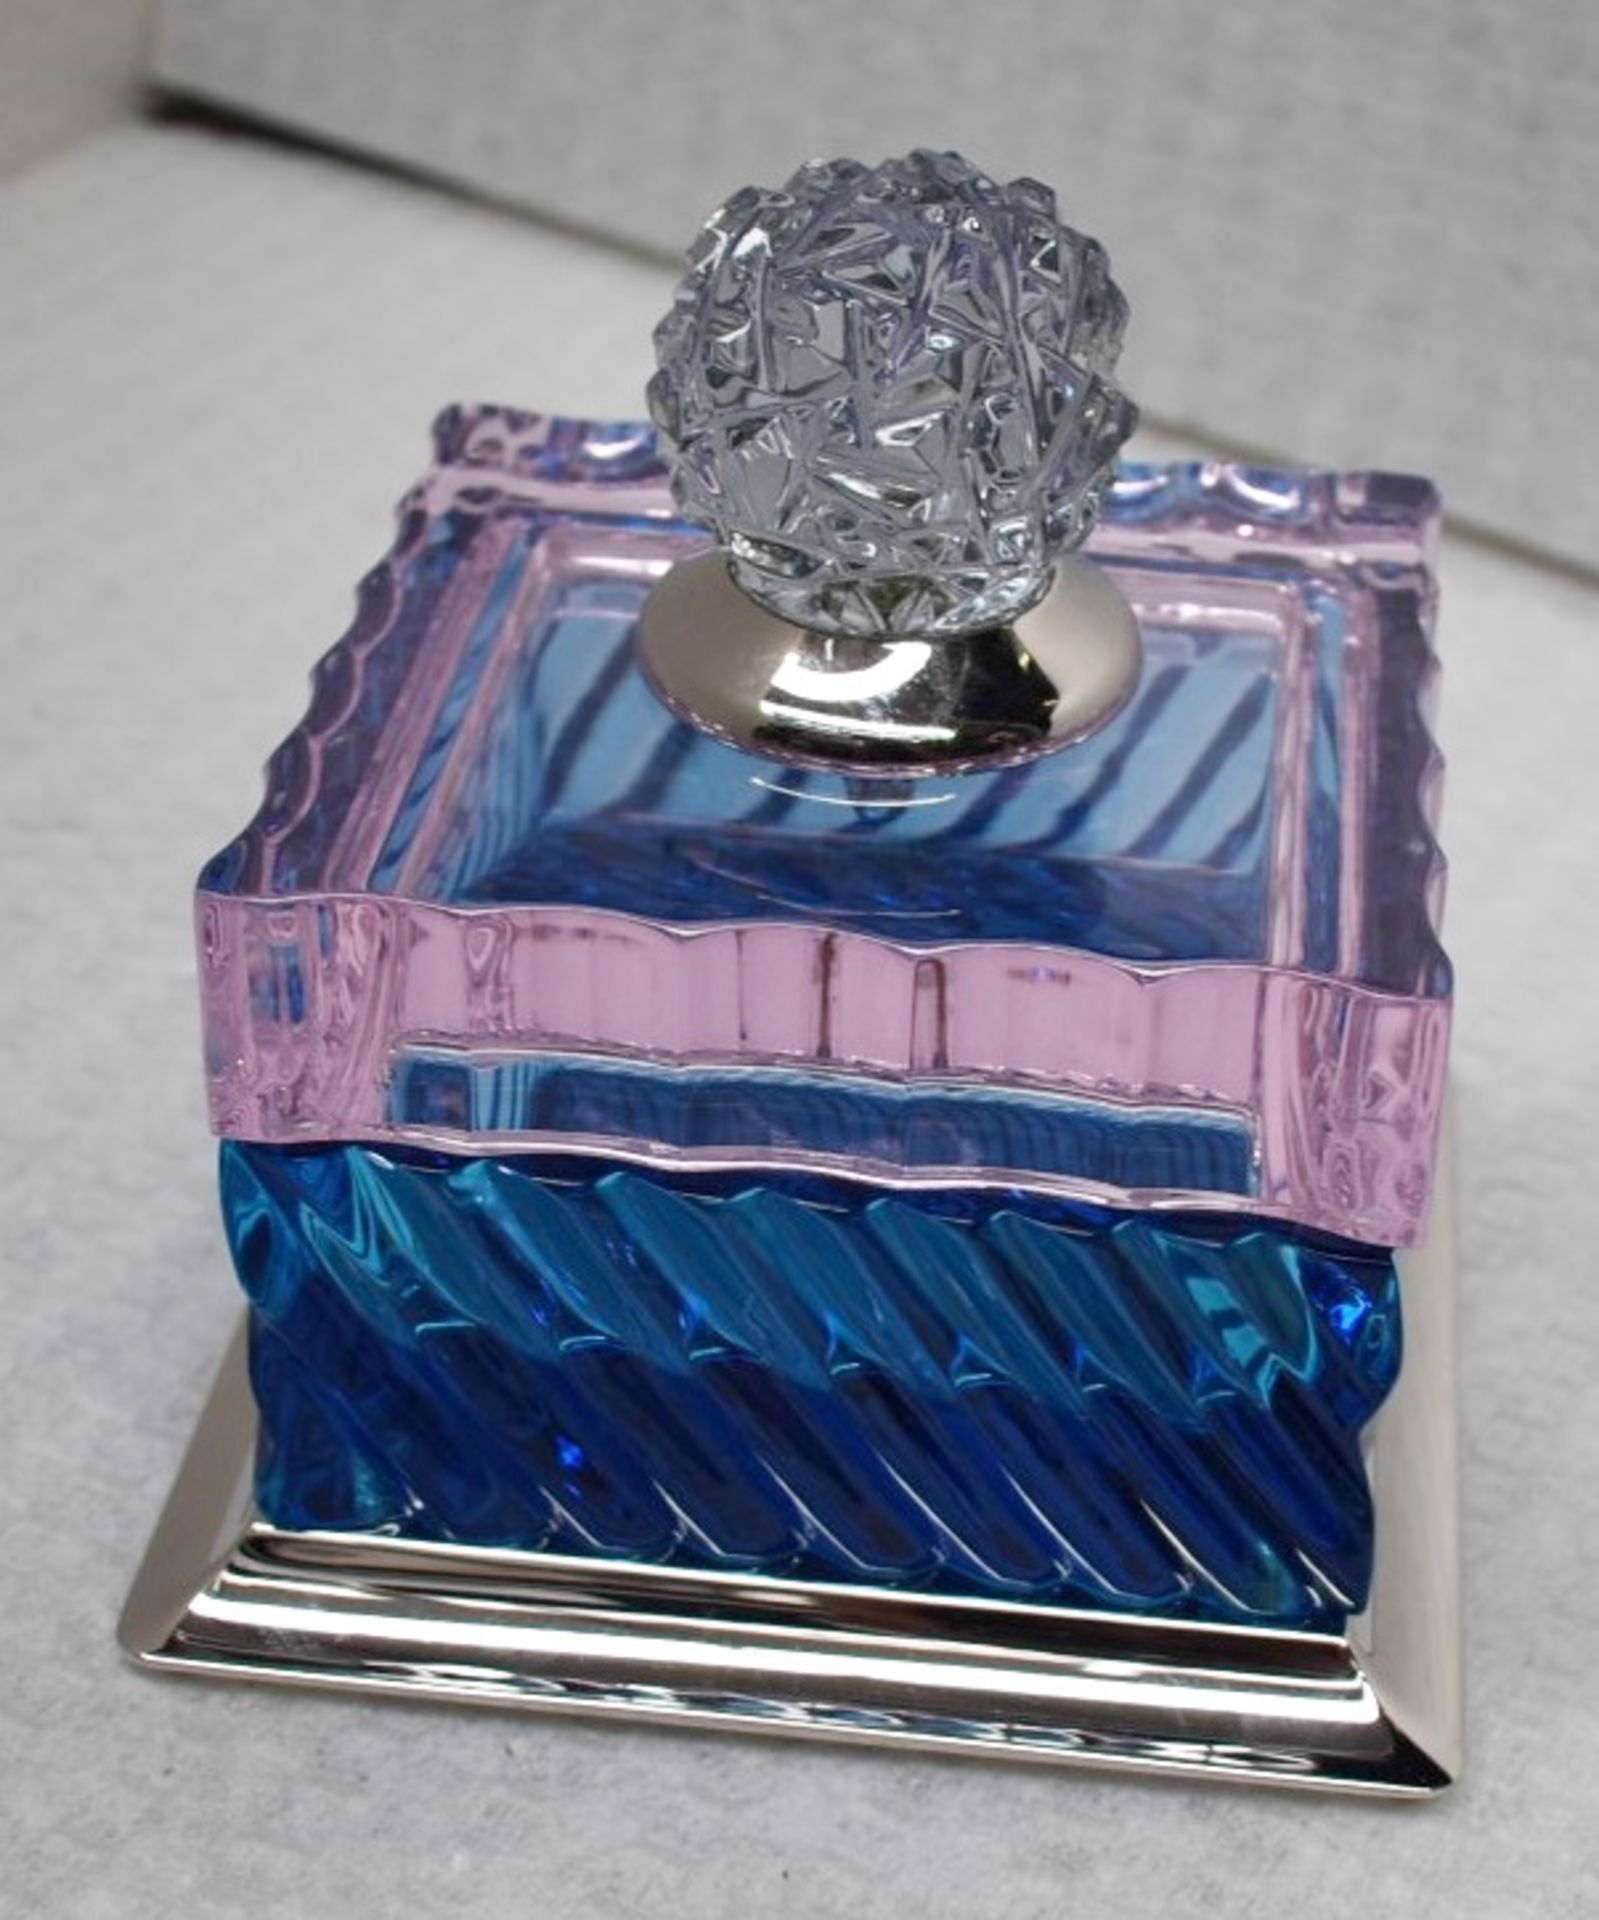 1 x BALDI 'Home Jewels' Italian Hand-crafted Artisan Crystal Box **Original RRP £1,015** - Image 6 of 6